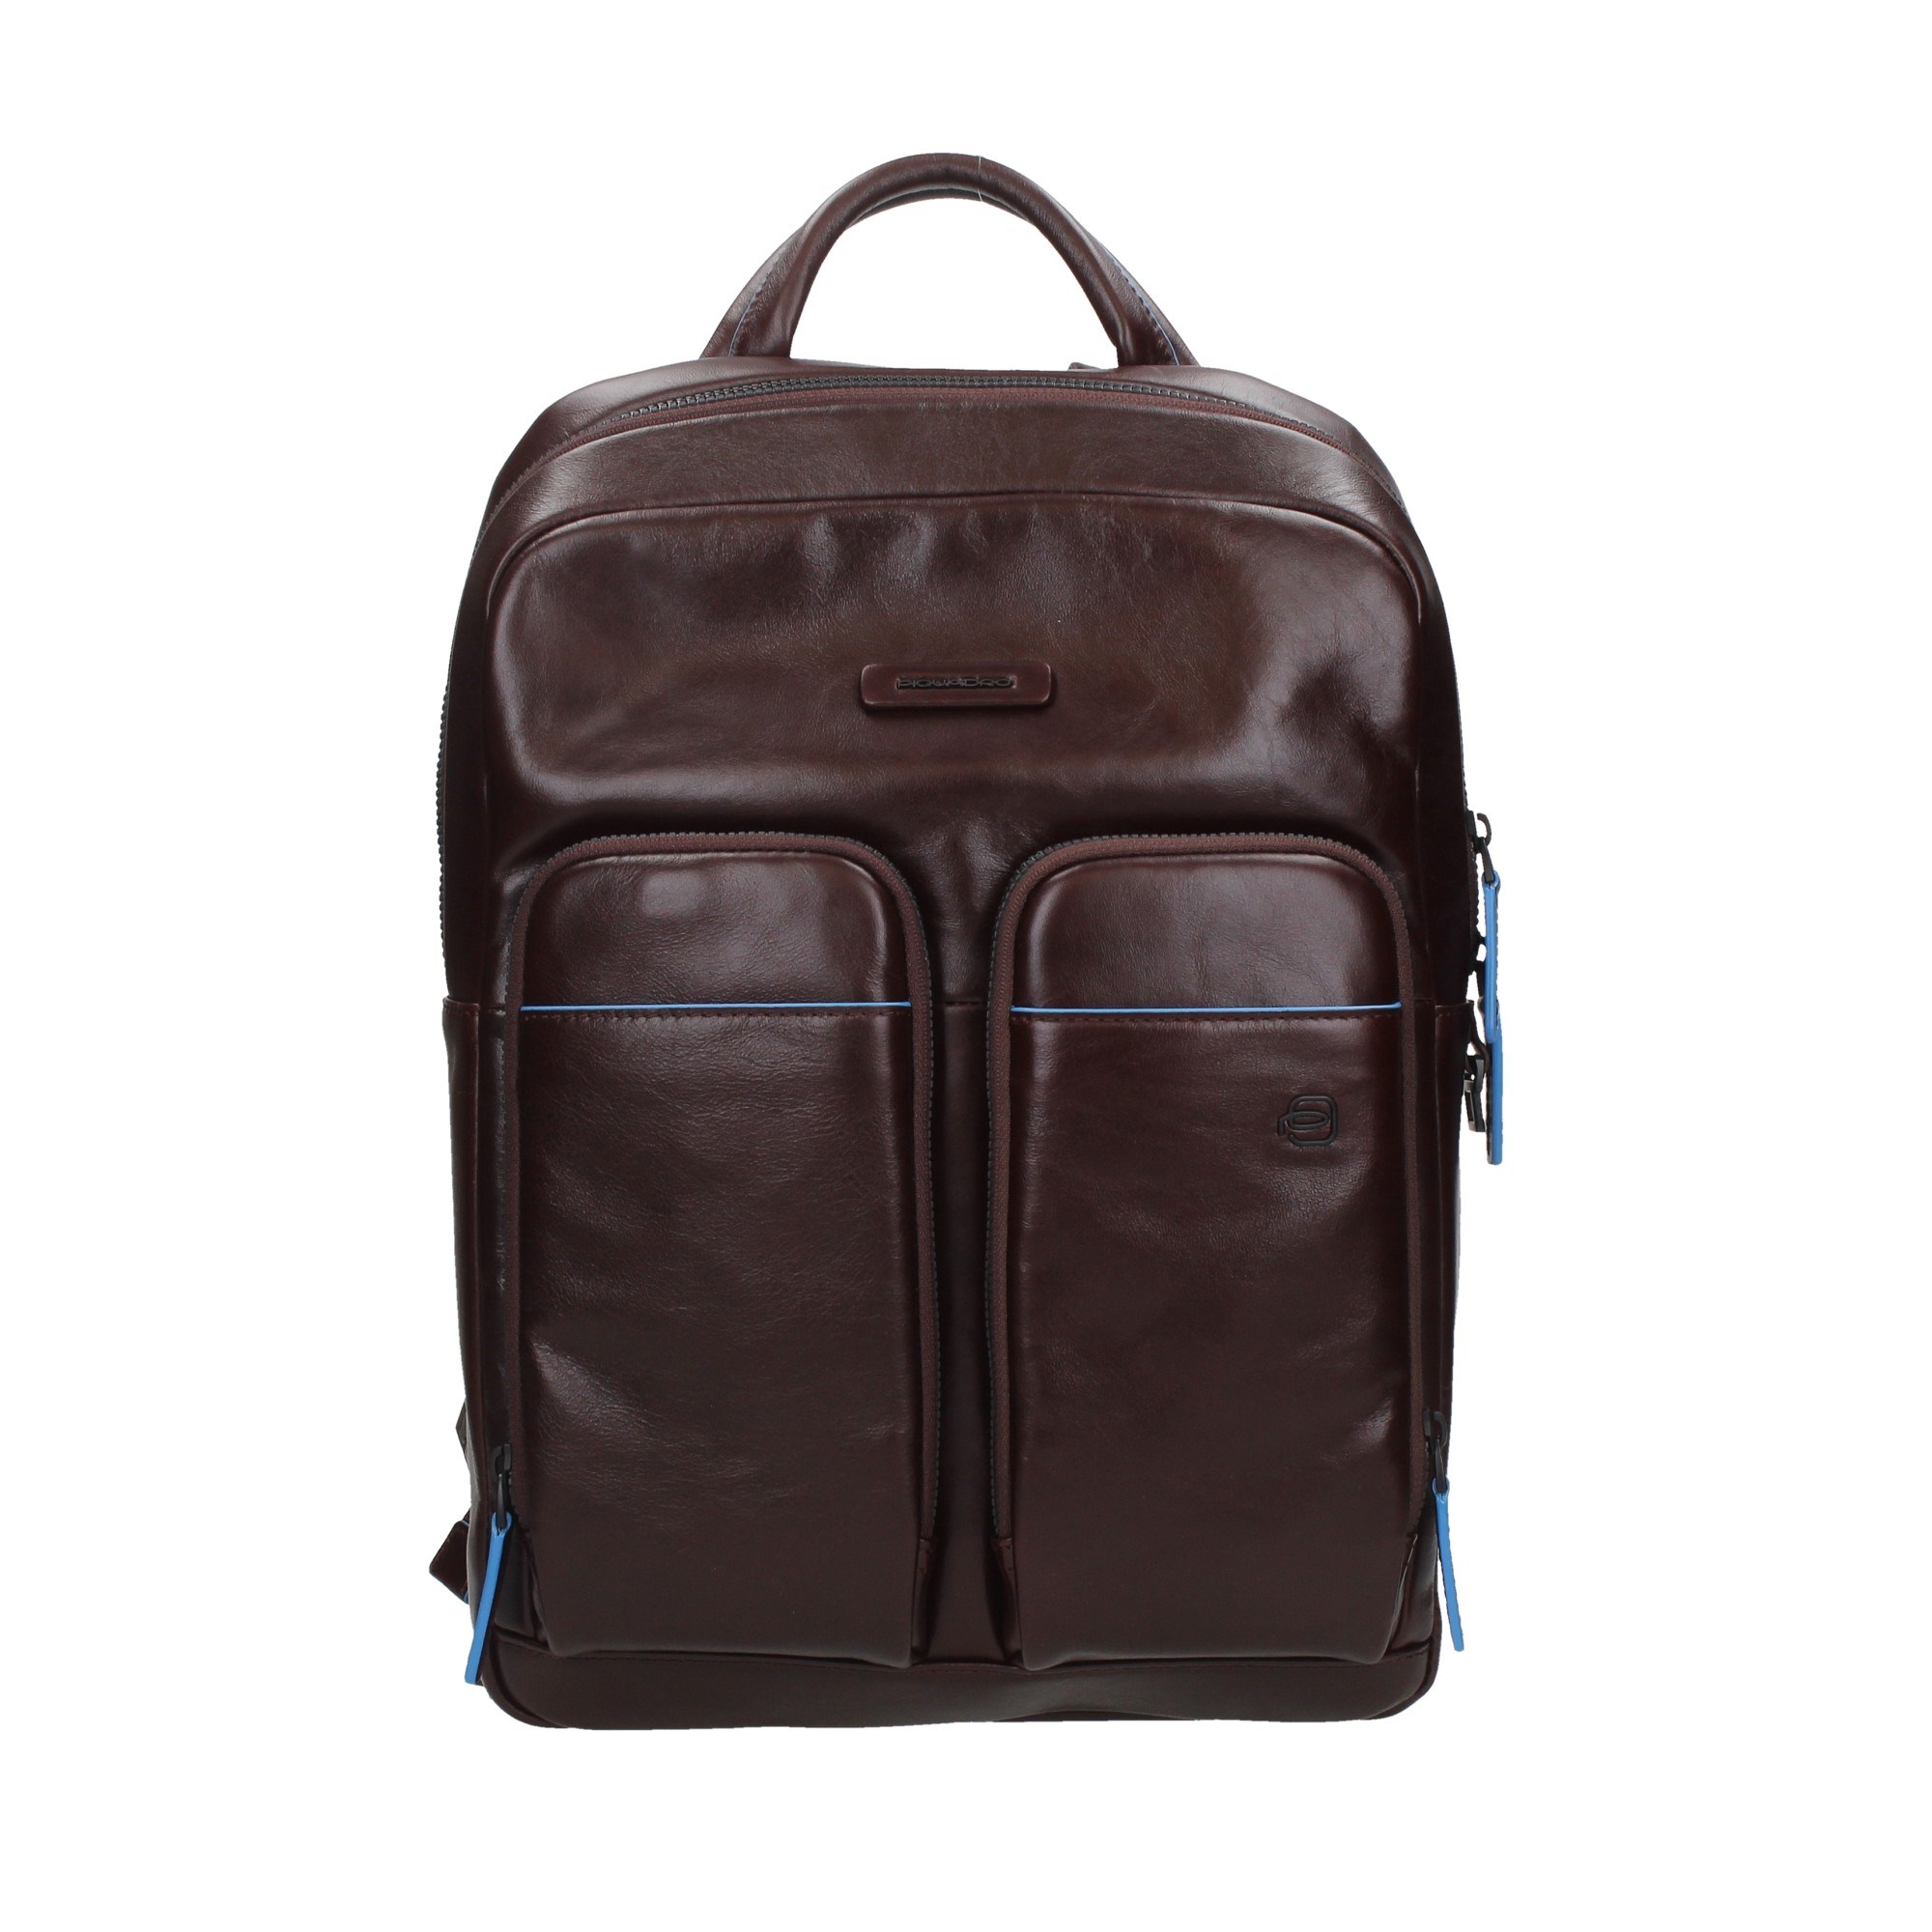 Piquadro. Accessories Man Backpack CA5575B2V/MO